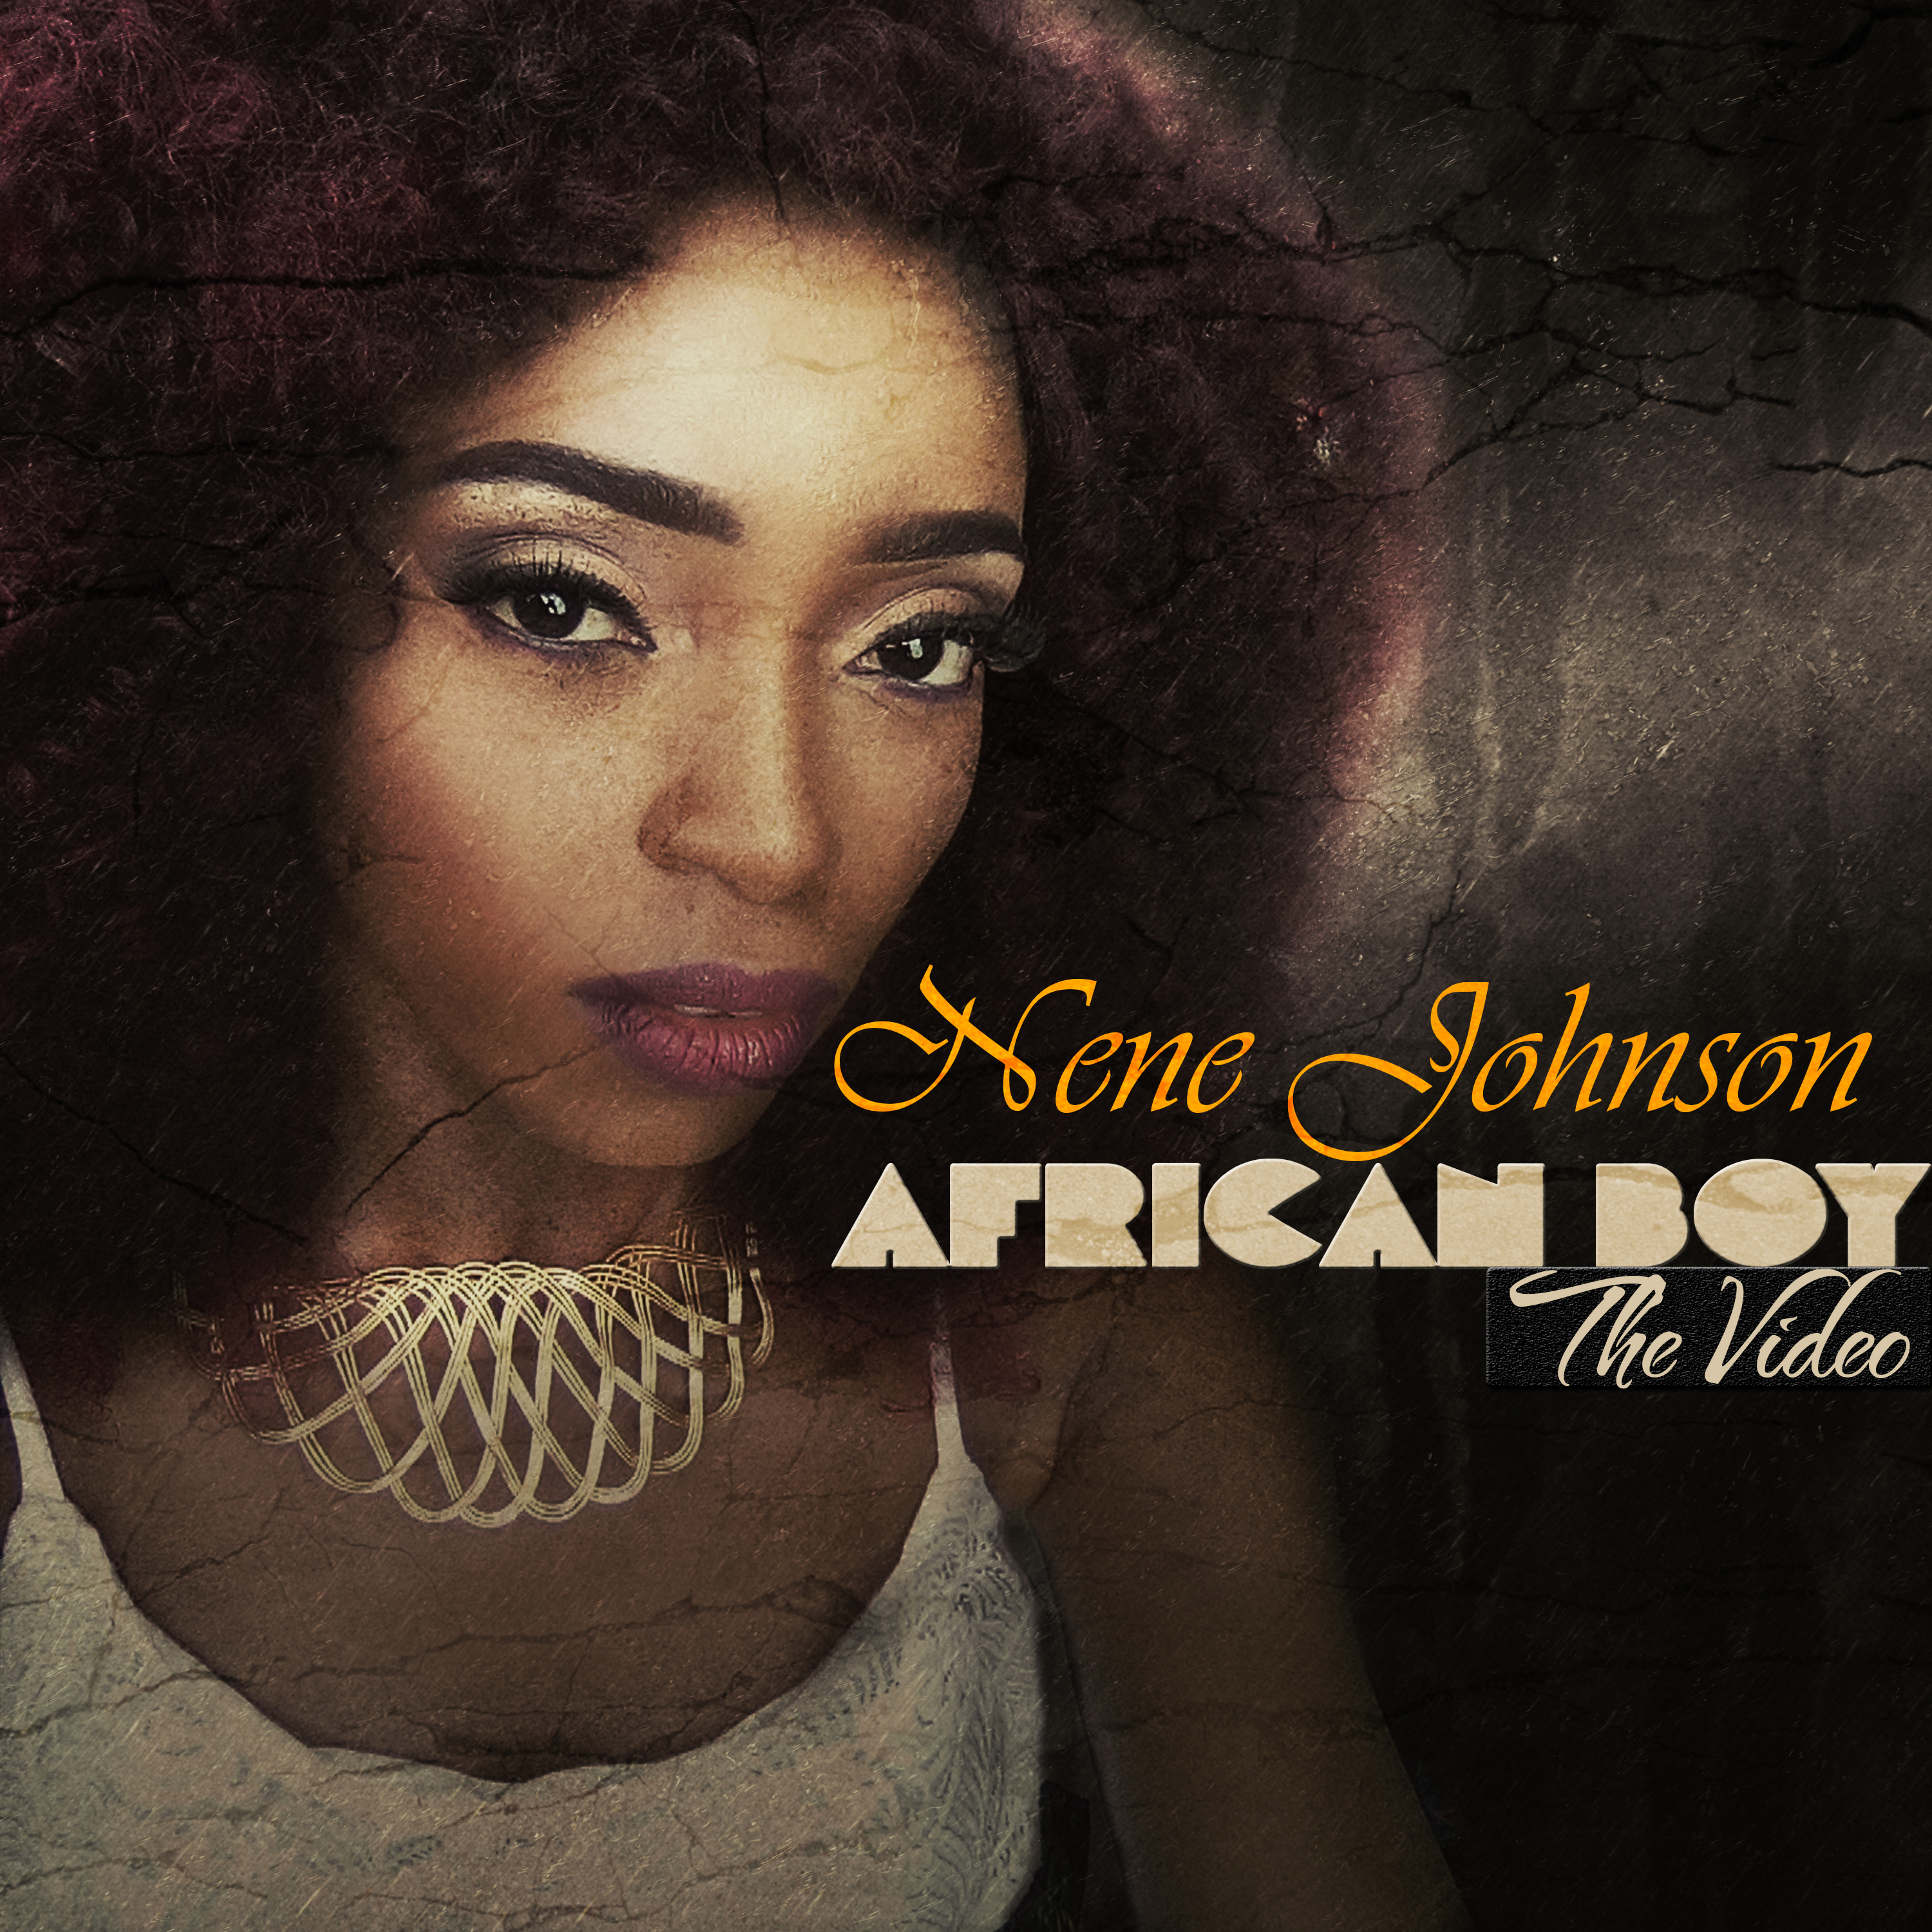 VIDEO: Nene Johsnon – African Boy